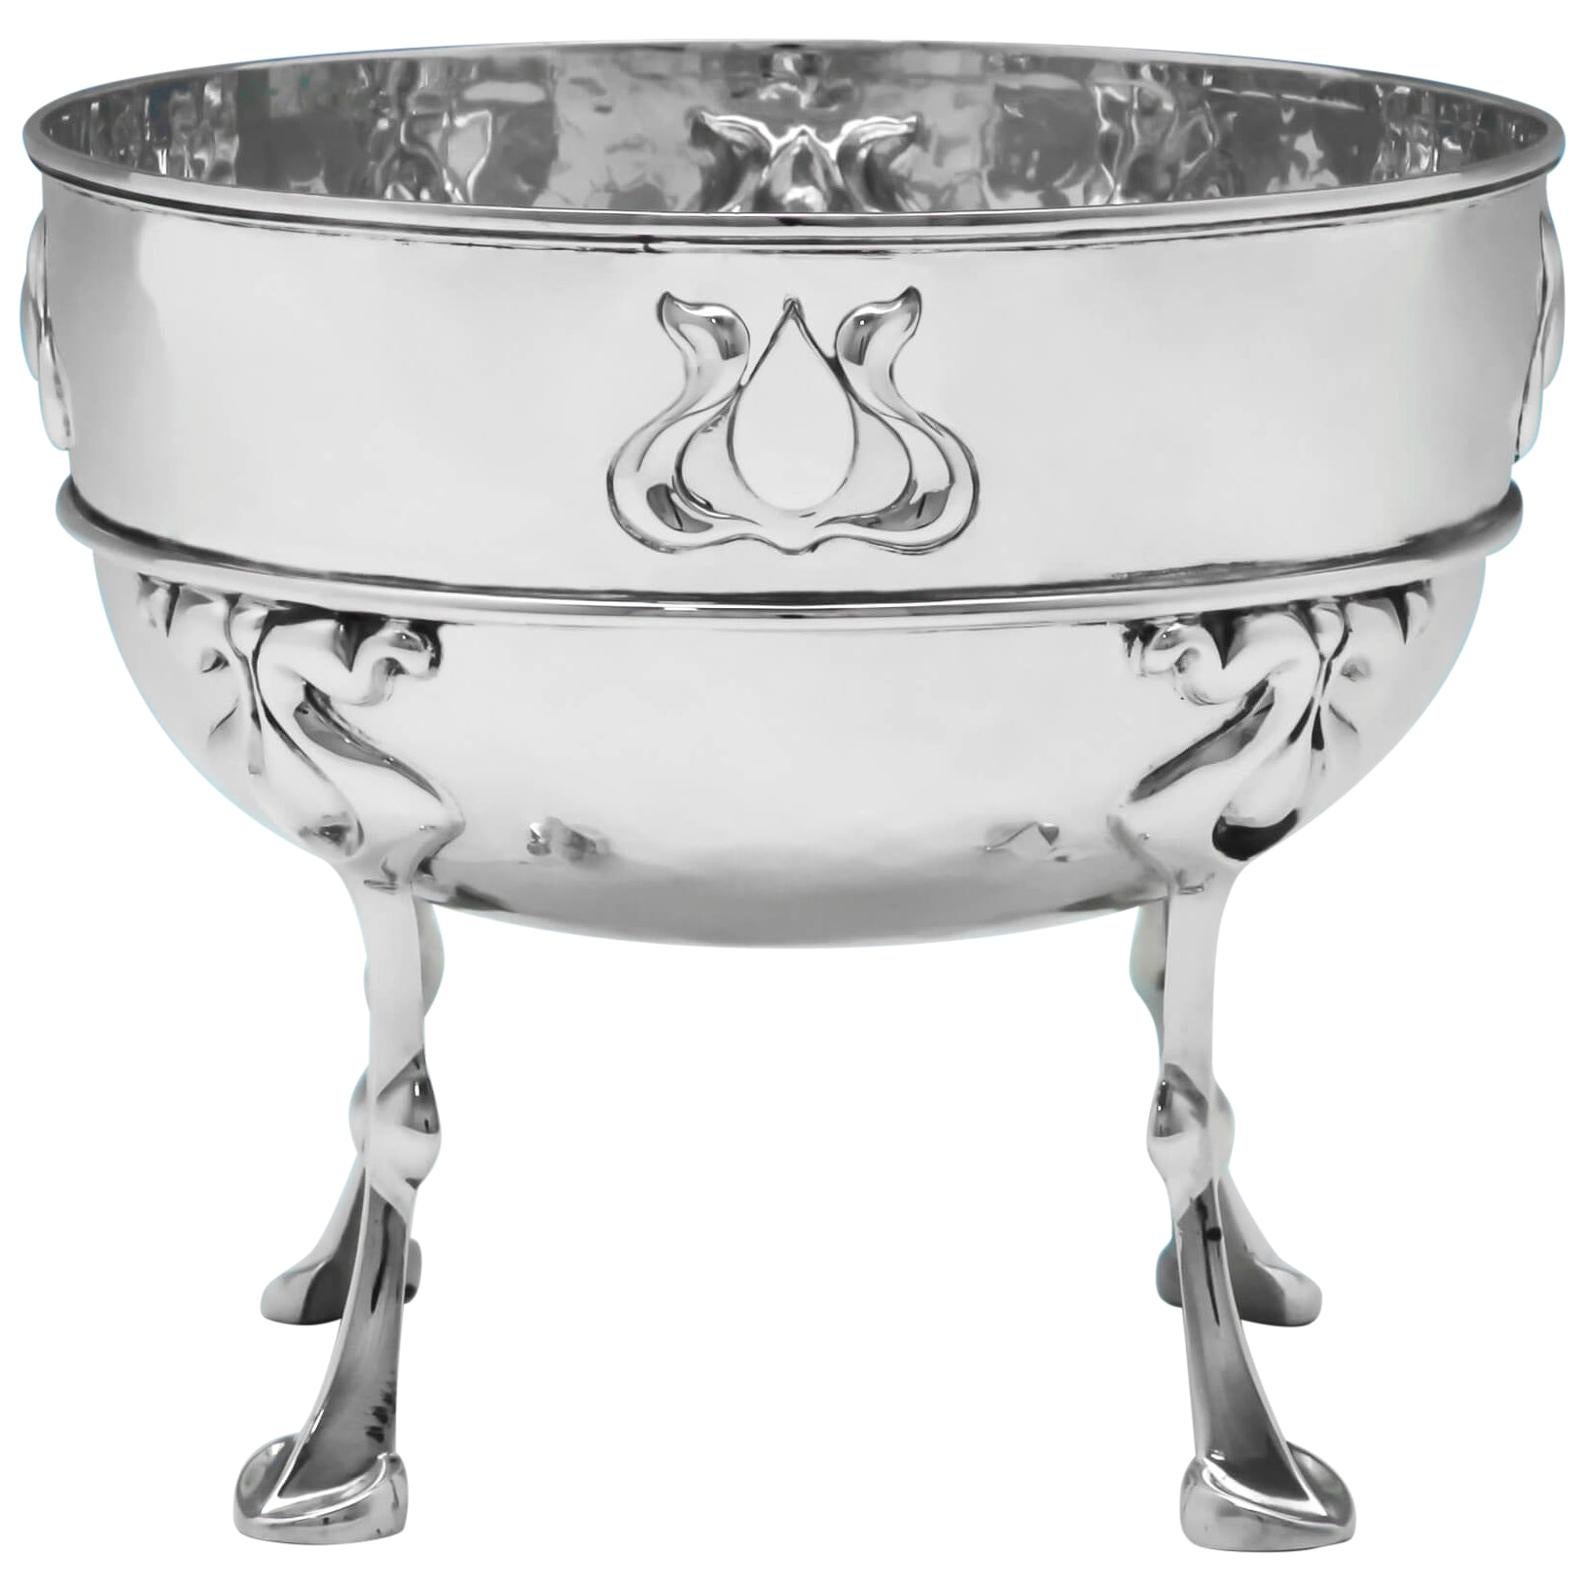 Art Nouveau & Arts & Crafts Design Antique Sterling Silver Bowl from 1906